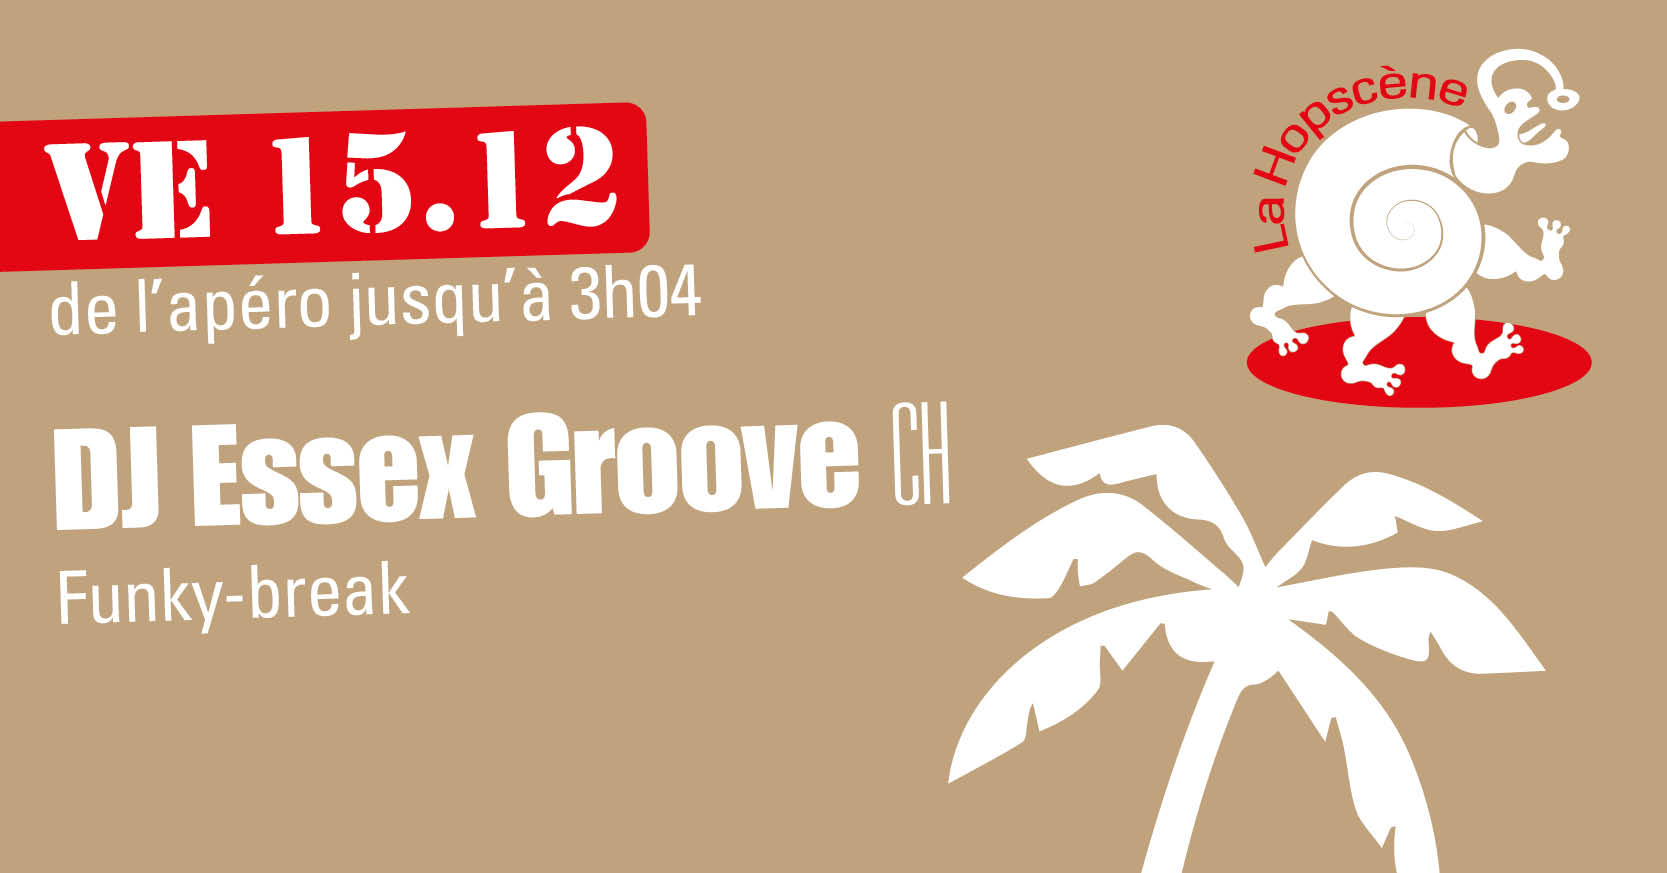 DJ Essex Groove